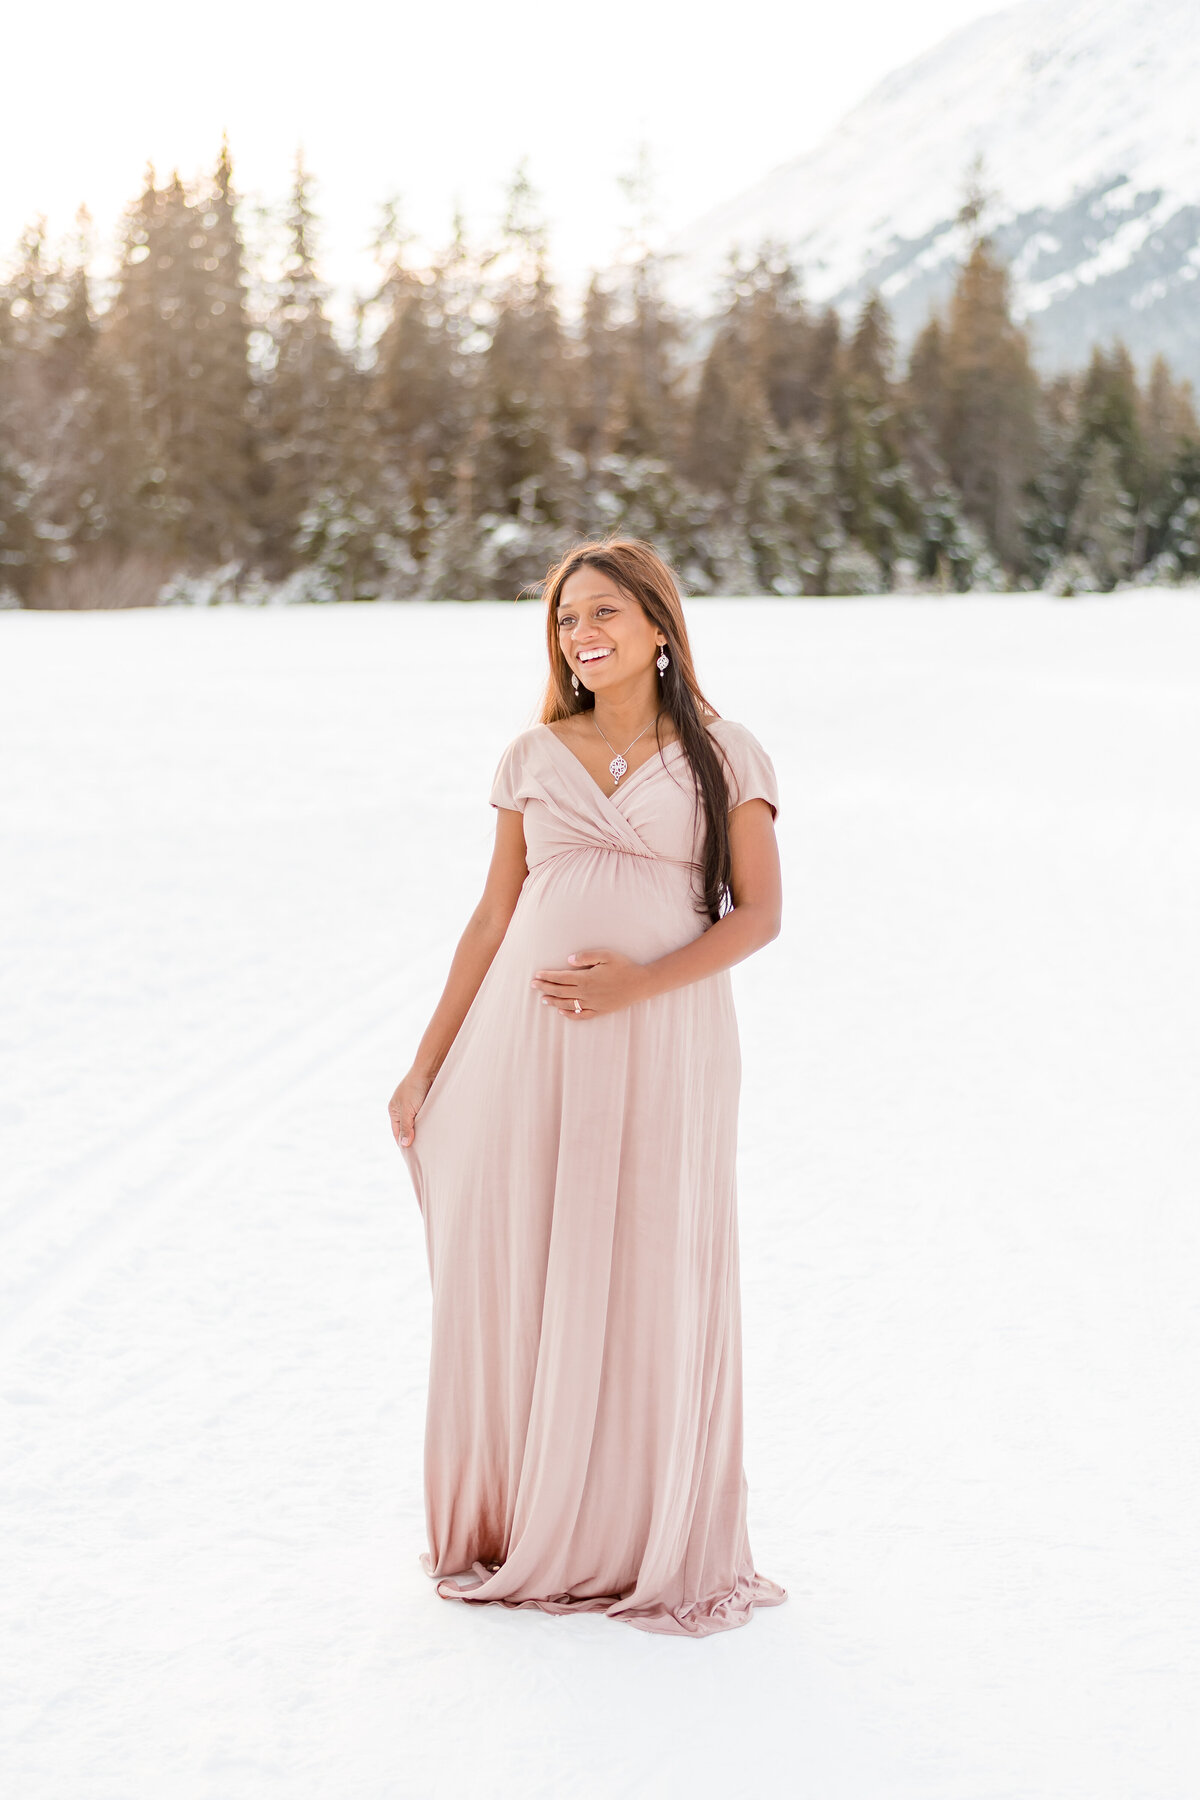 Alaska-Maternity-Photographer-16